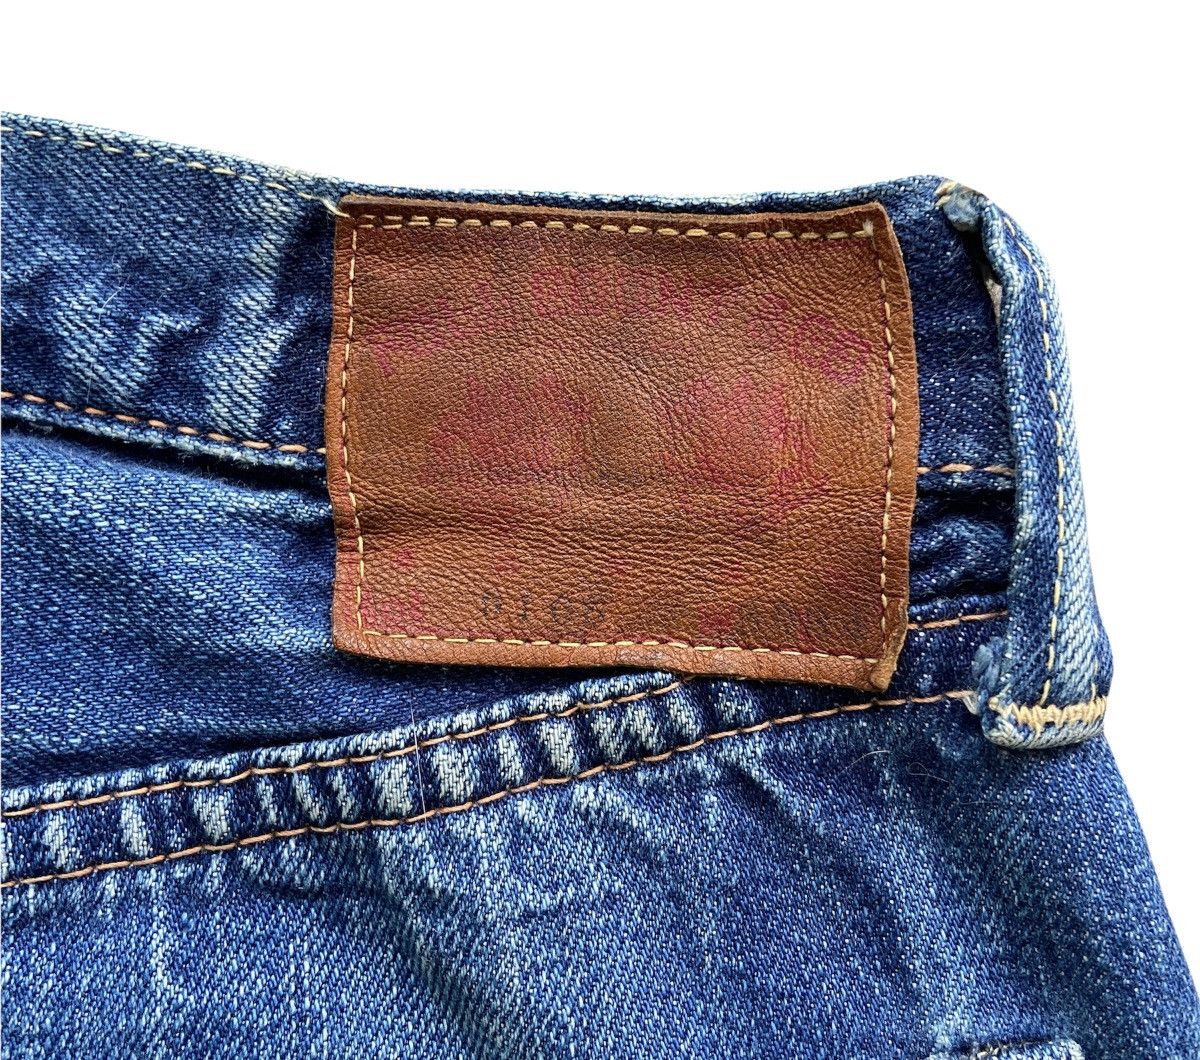 Full Count & Co. Vintage Full Count Selvedge Denim Jeans Size US 30 / EU 46 - 8 Thumbnail